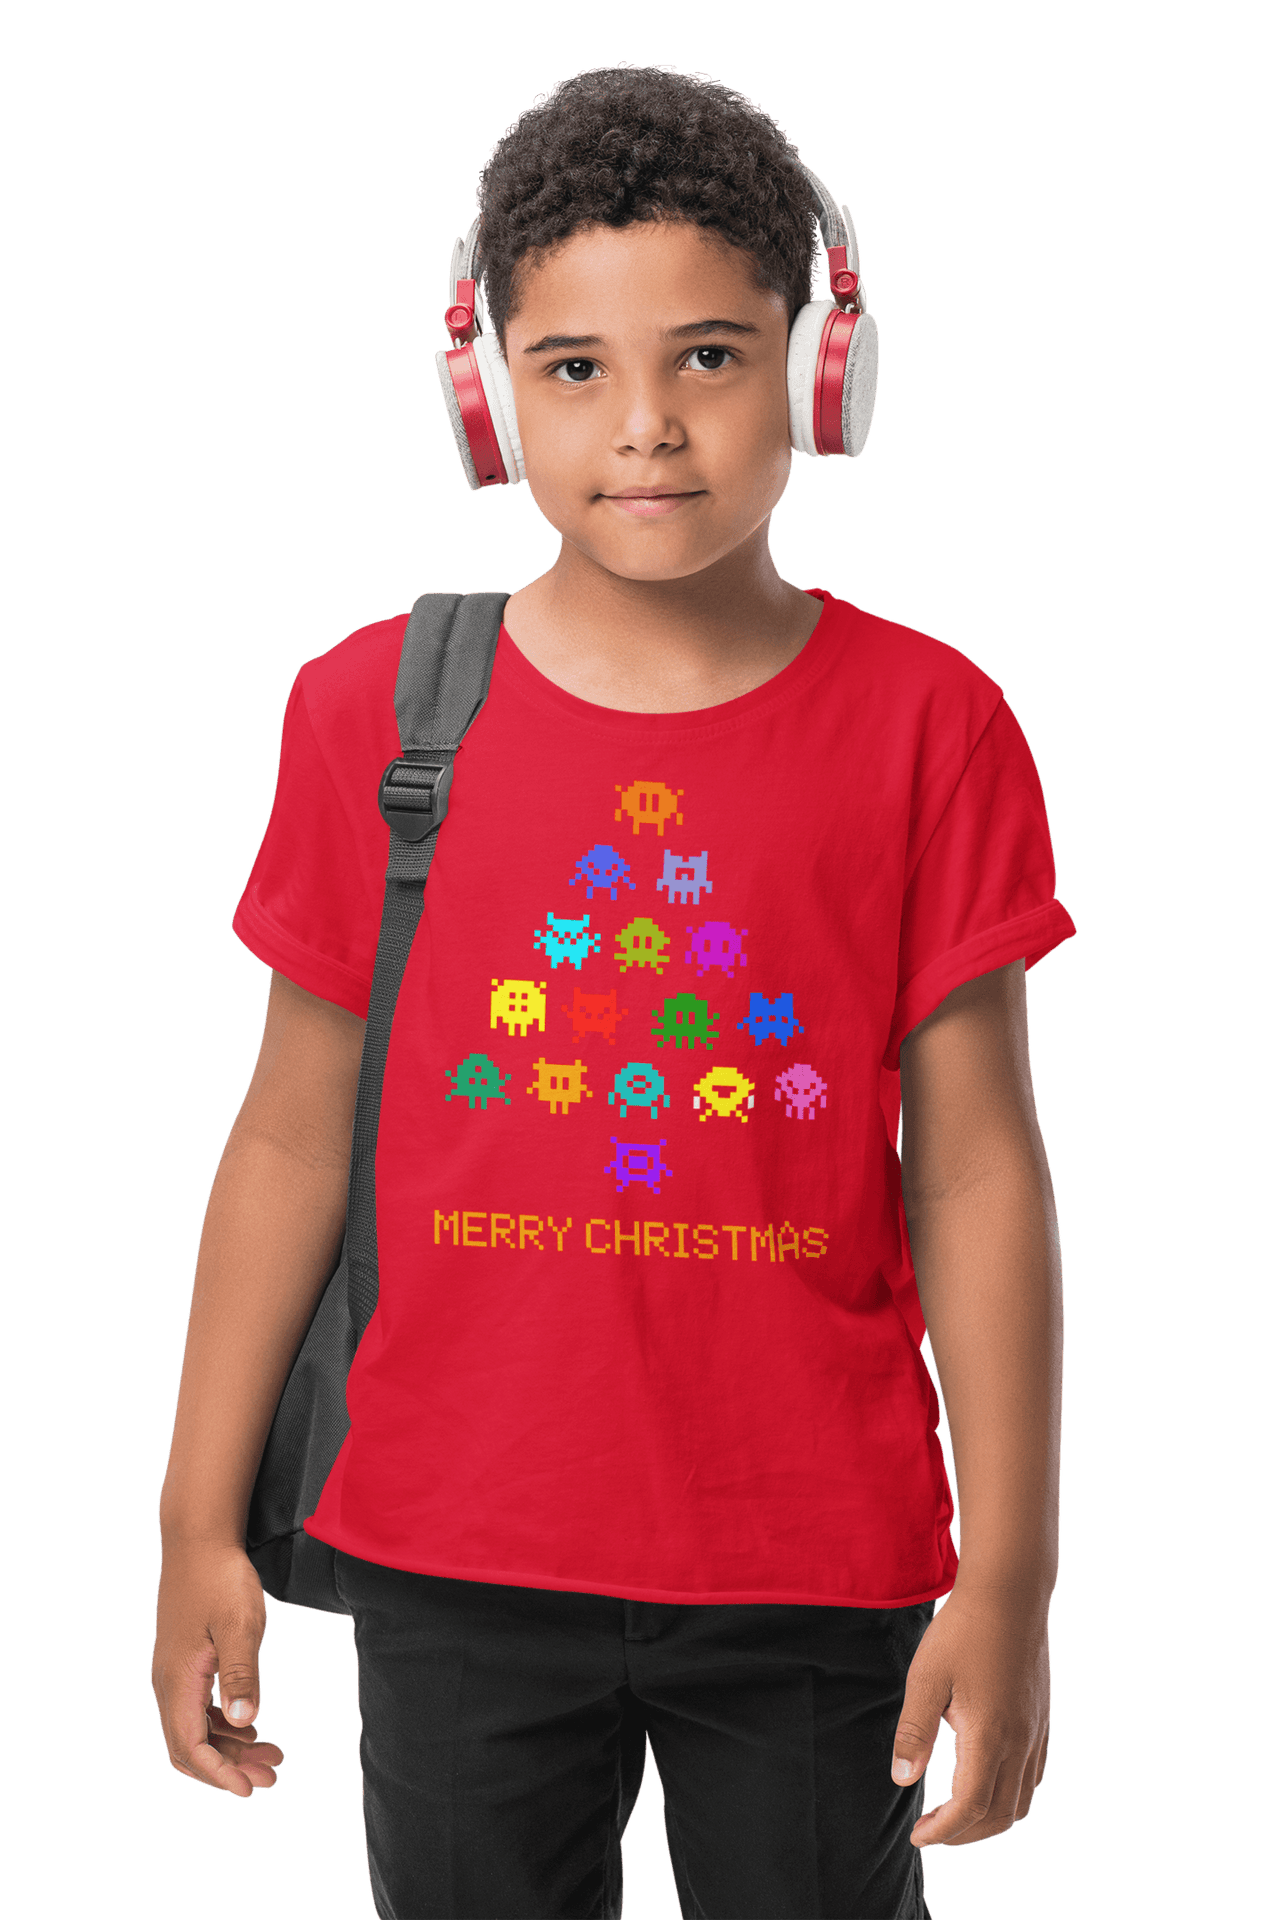 Invaders Christmas Tree Childrens Graphic T-Shirt 8Ball